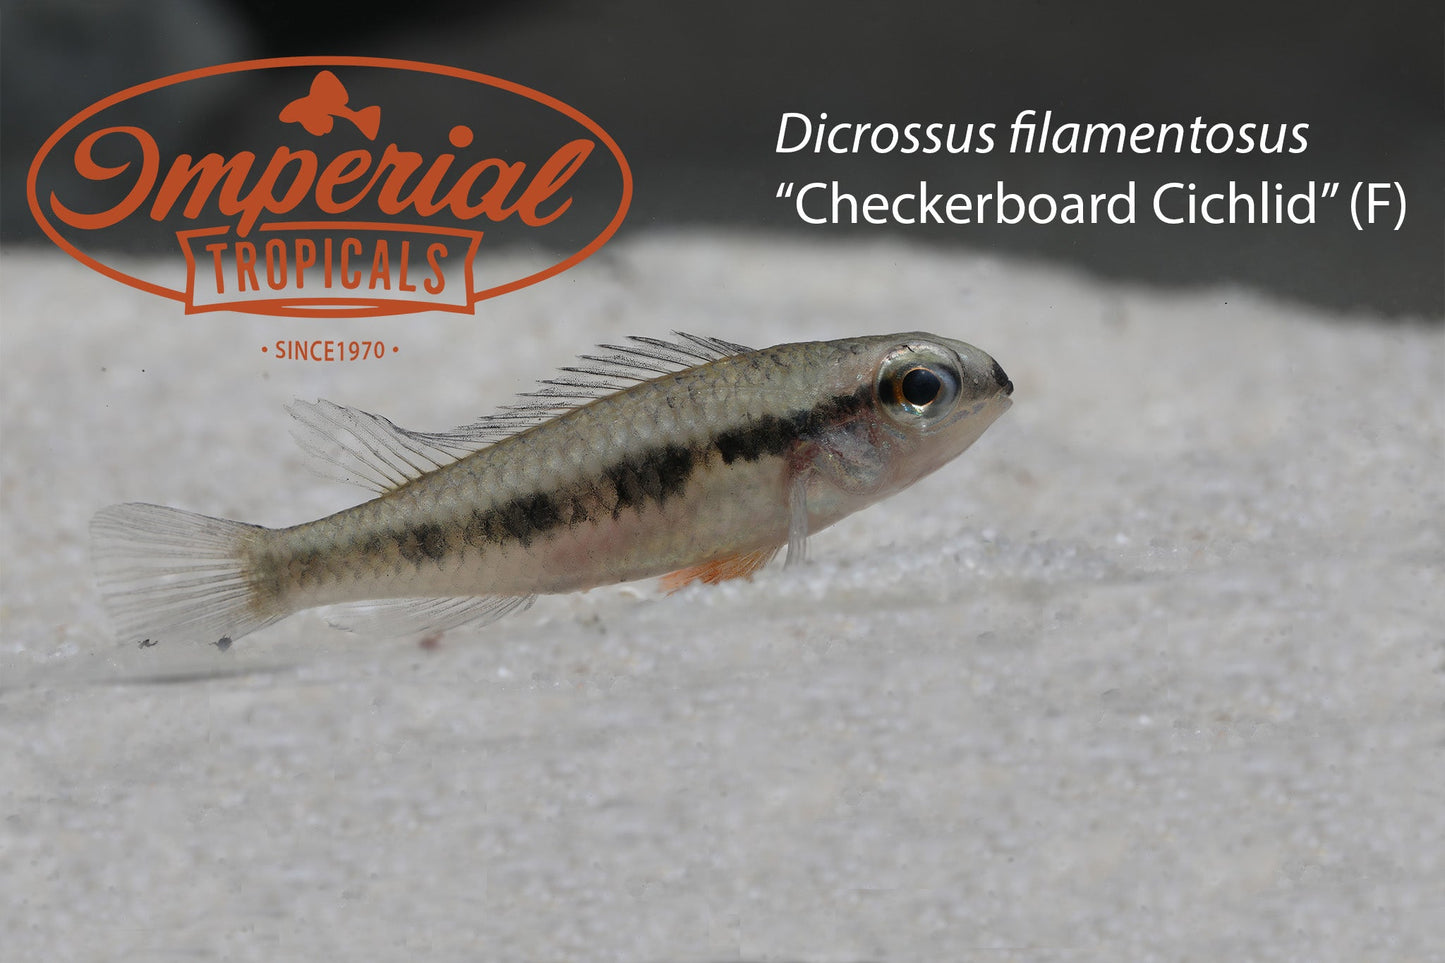 Checkerboard Cichlid